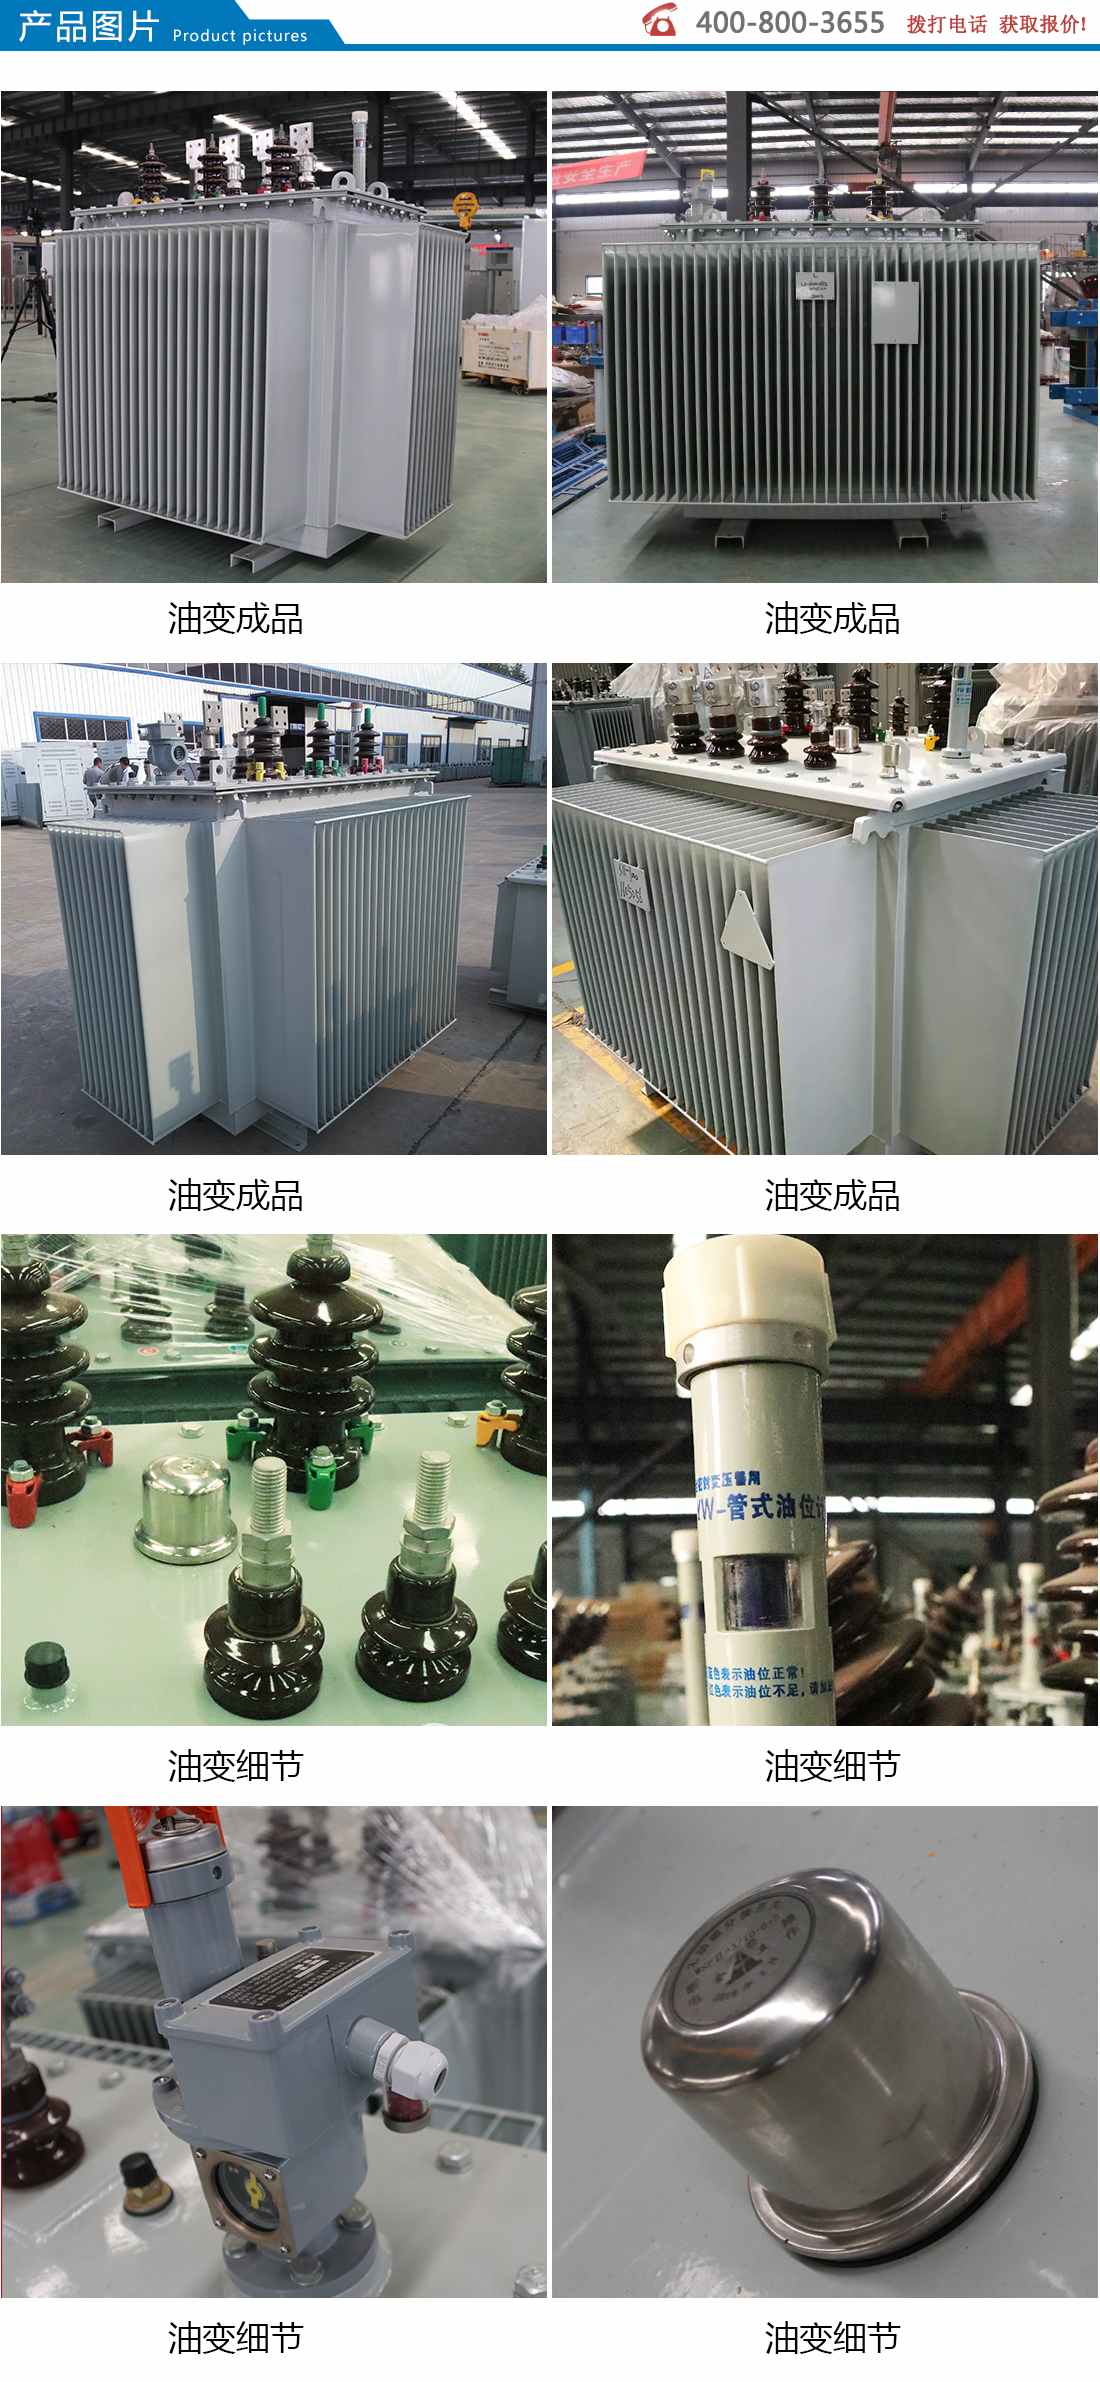 20kv-10kv级双电压转换S11系列油浸式变压器